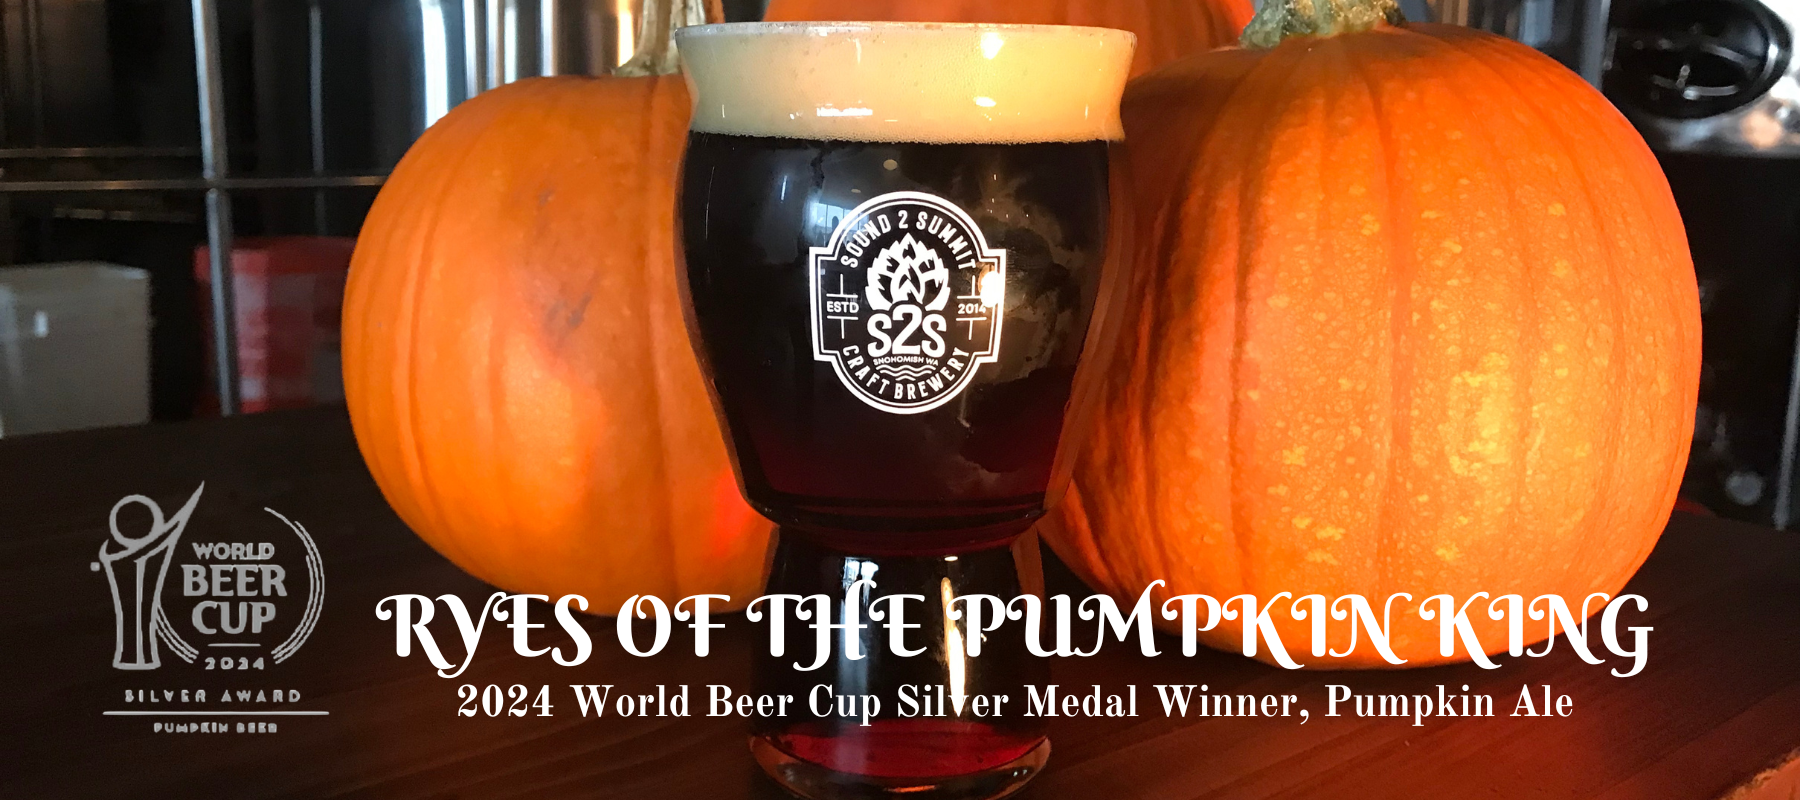 World Beer Cup Award Winning Beer